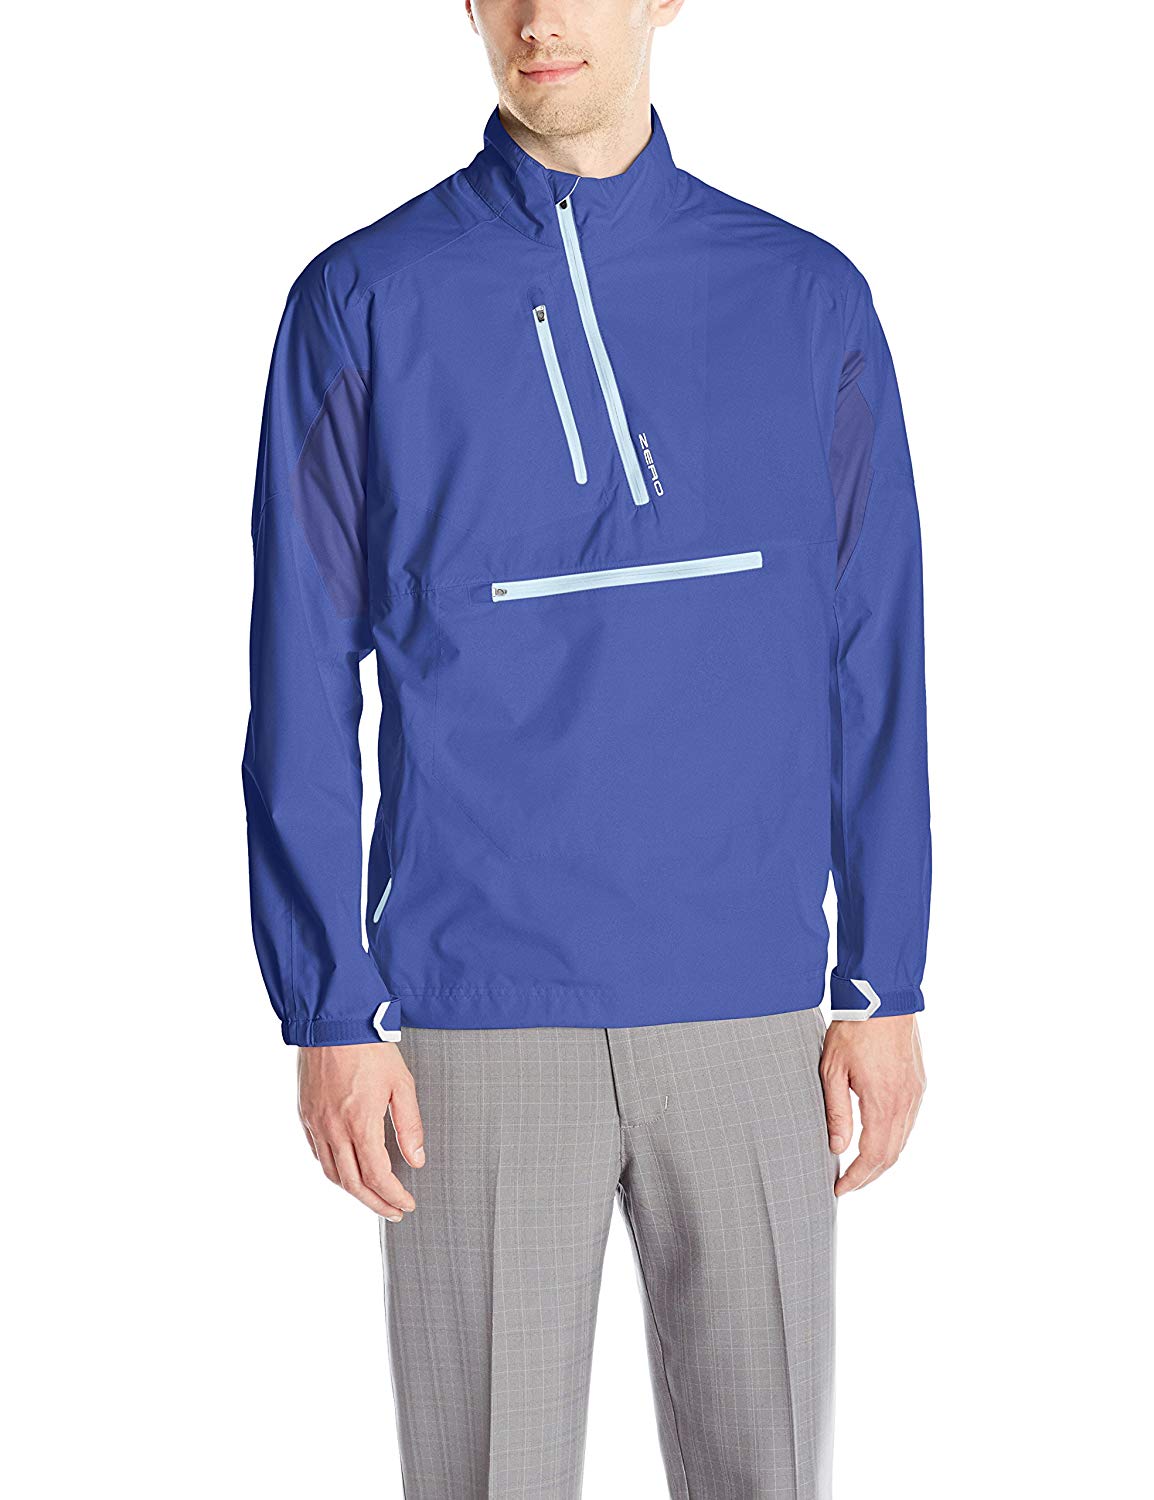 Zero Restriction Mens Packable Anorak Rain Golf Jackets